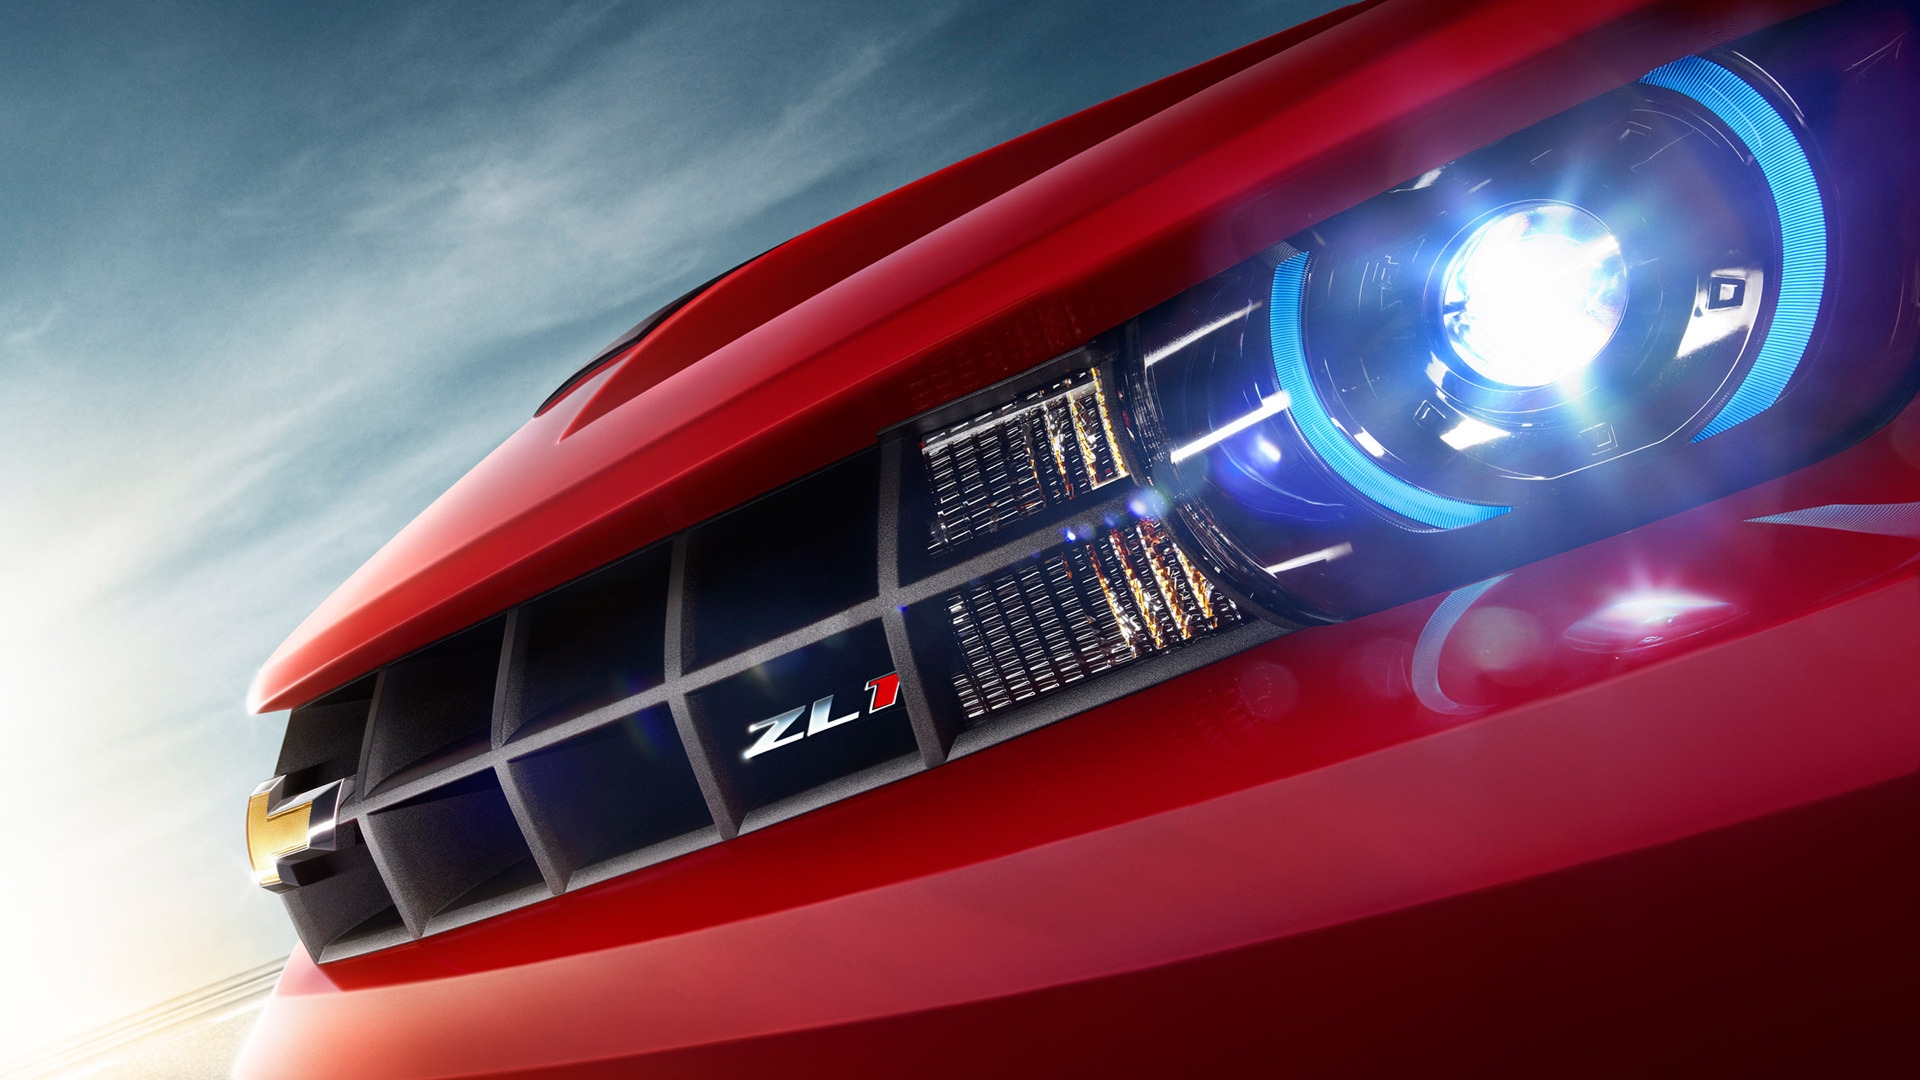 2012 Chevy Camaro ZL1 Headlight for 1920 x 1080 HDTV 1080p resolution